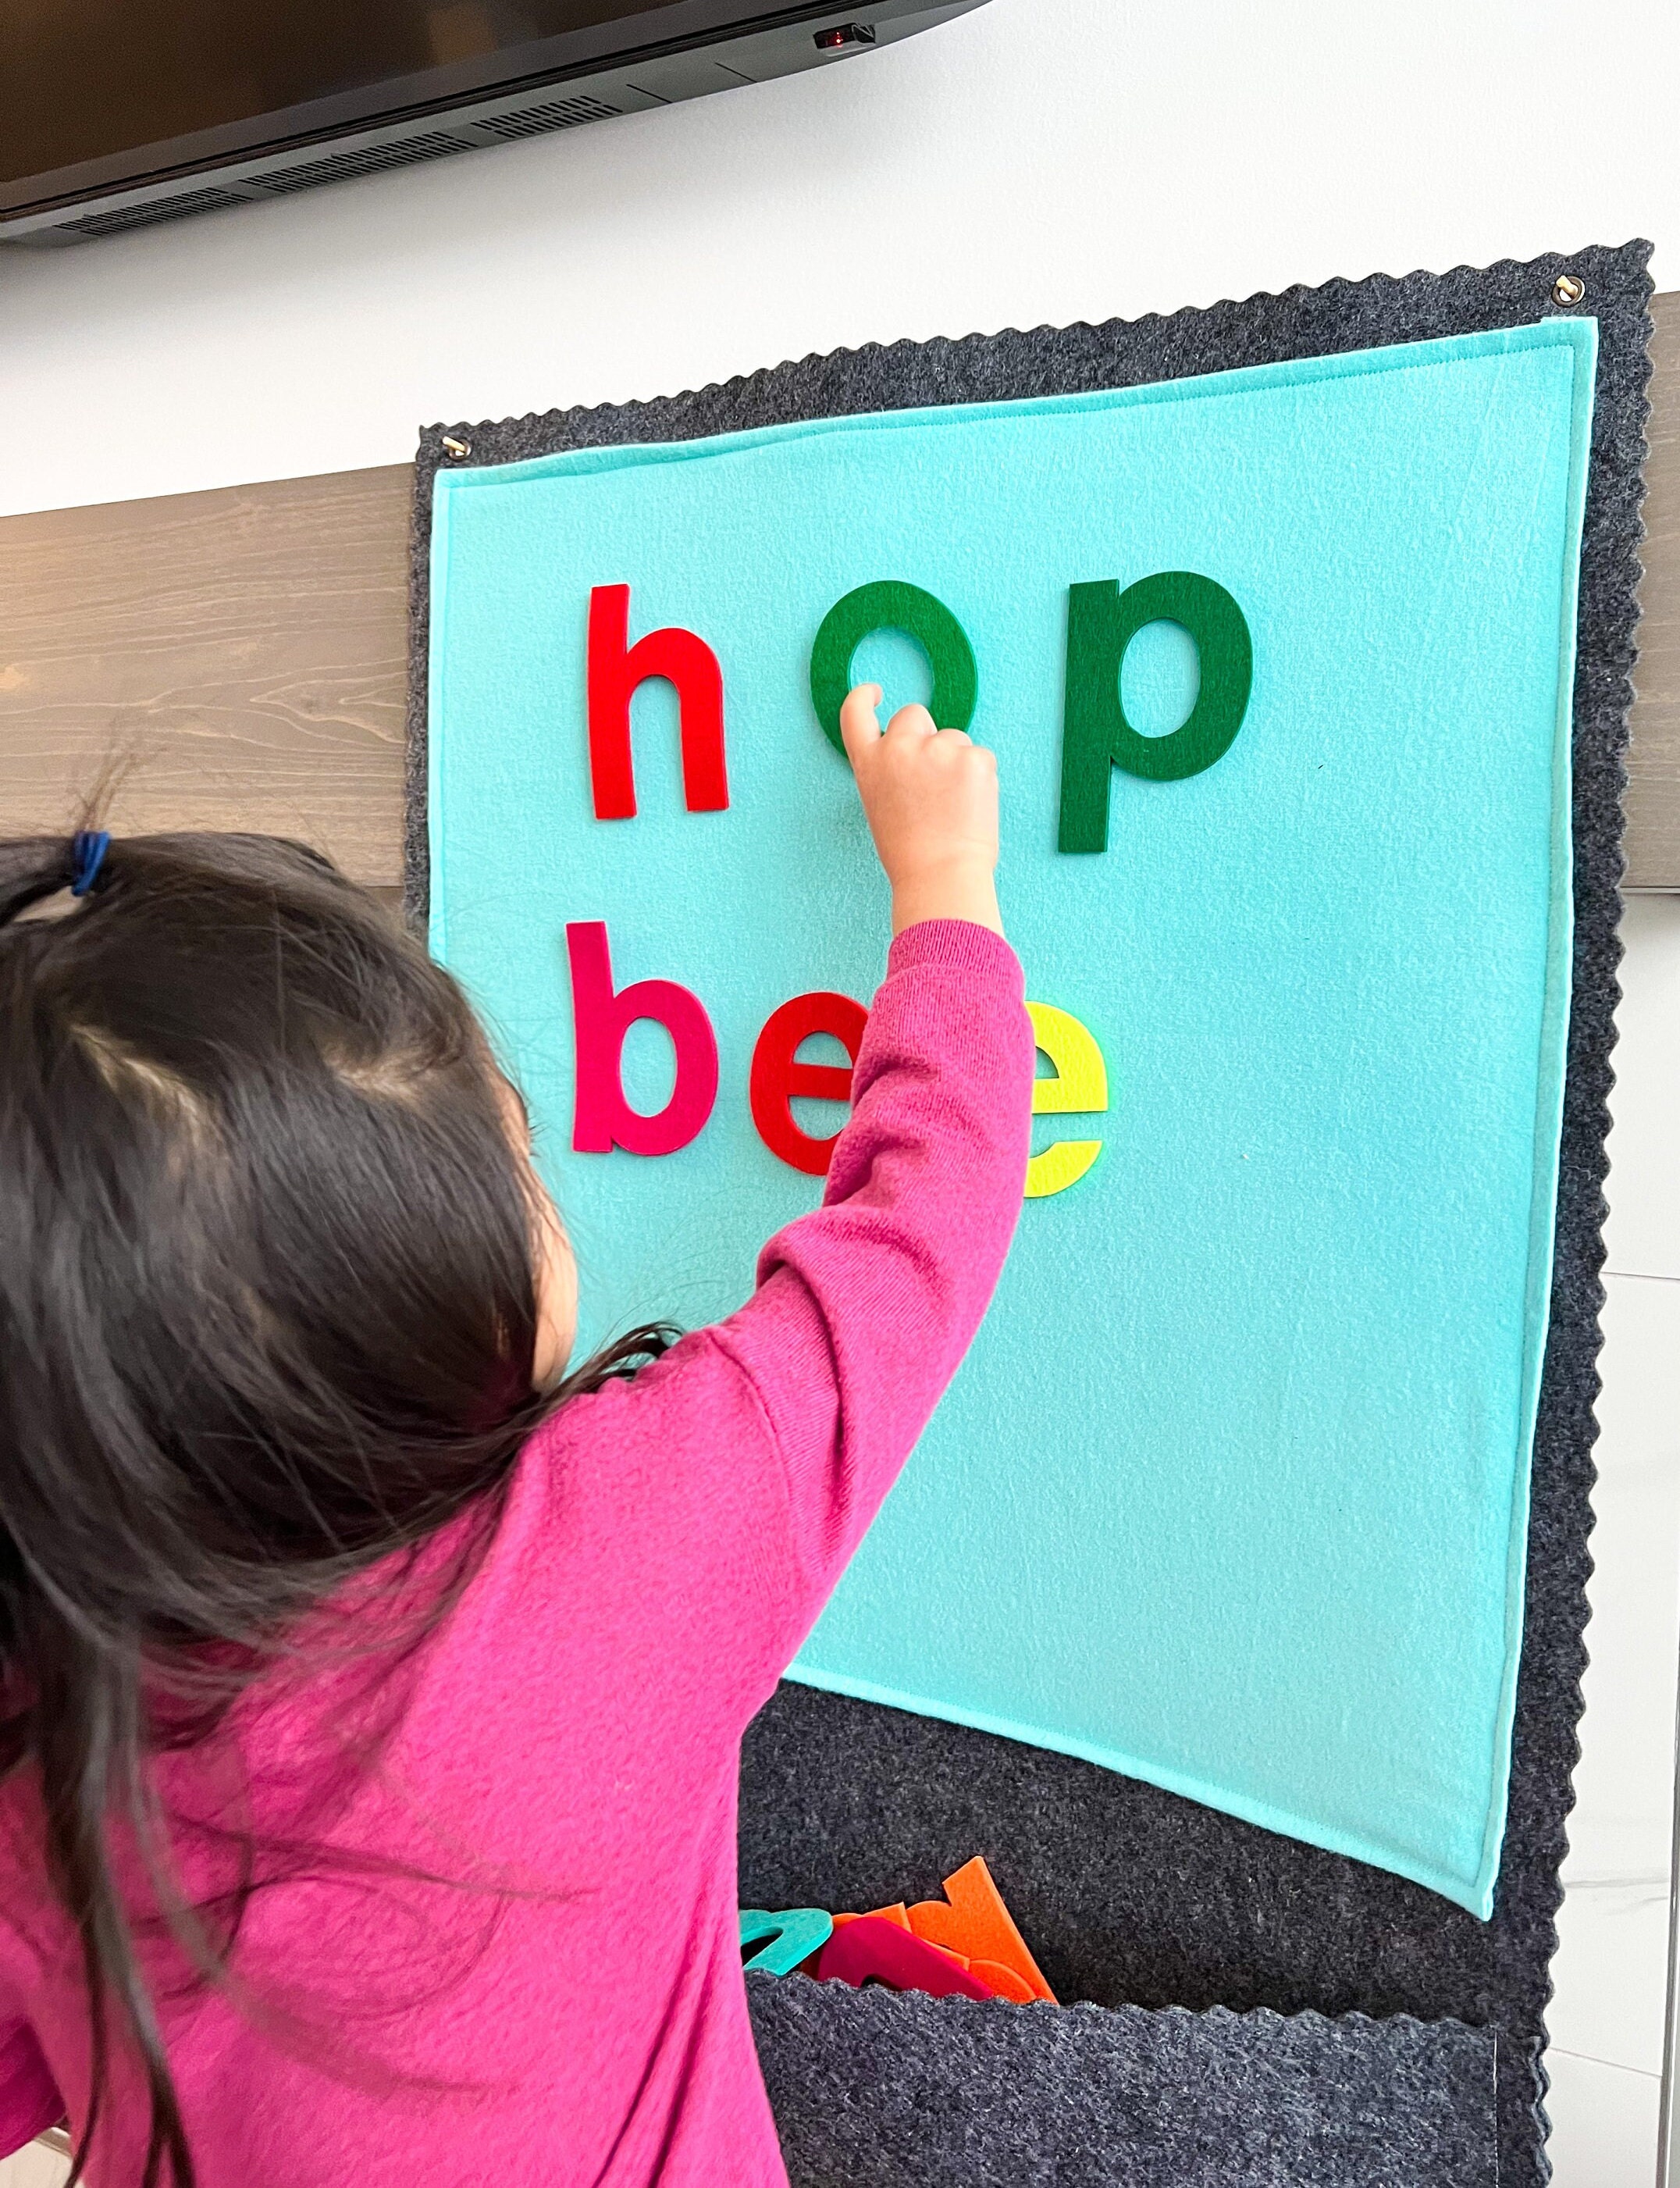 Flannel Boards Felt Boards for Kids Educational Toy for Toddler Flannel  Board Set Montessori Preschool Felt Wall Alphabet Set 